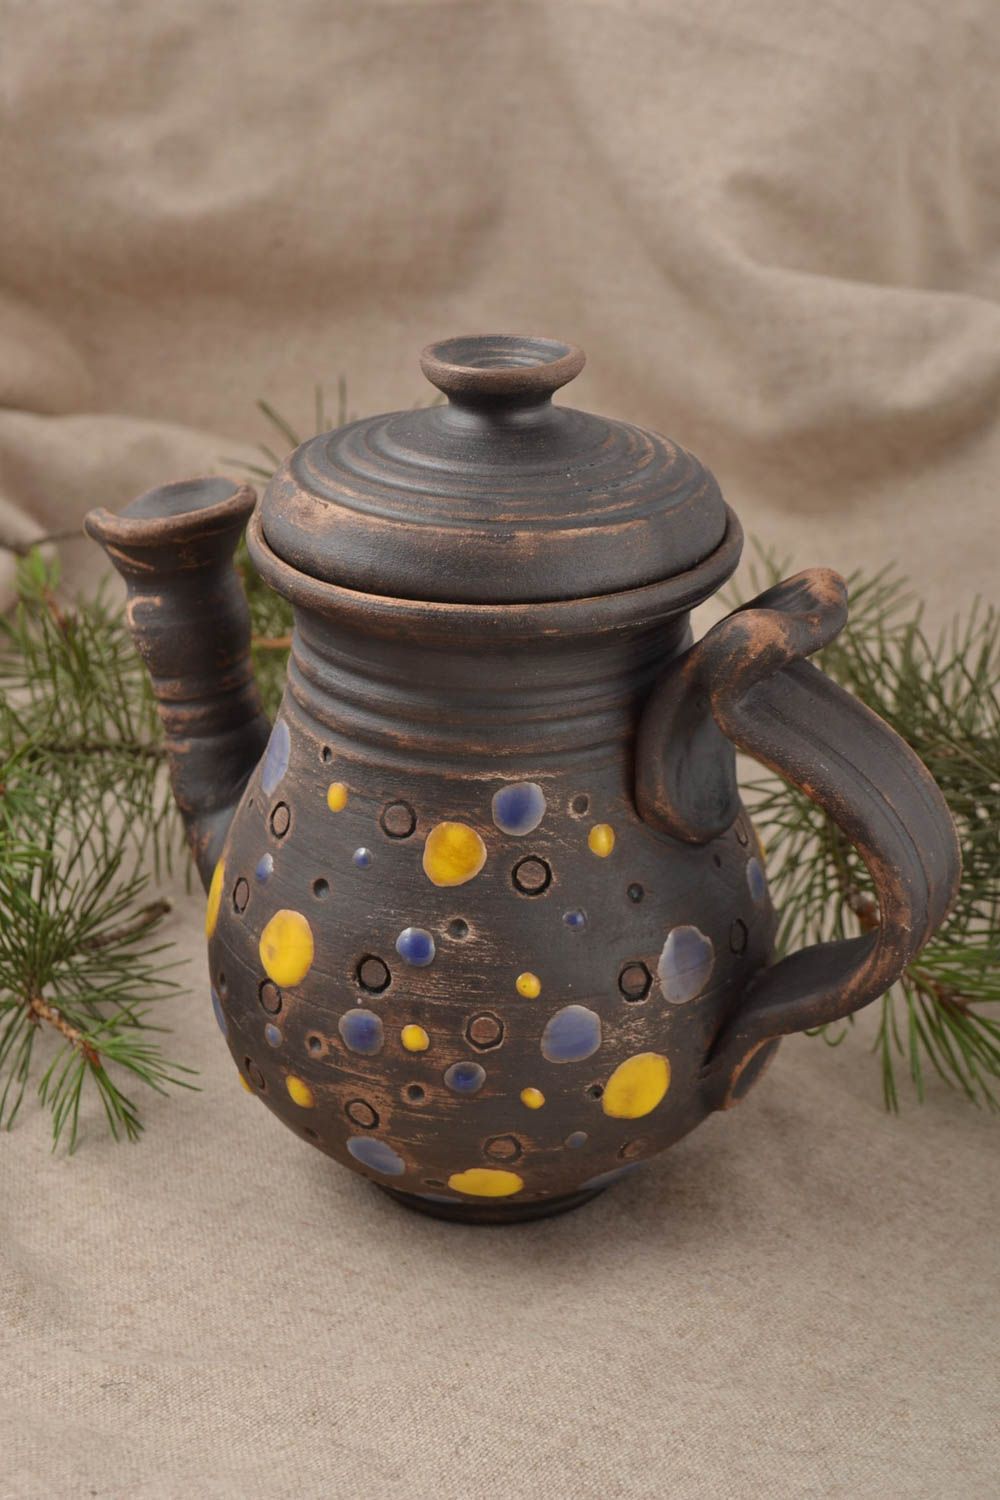 Beautiful handmade ceramic teapot pottery works kitchen supplies gift ideas photo 1